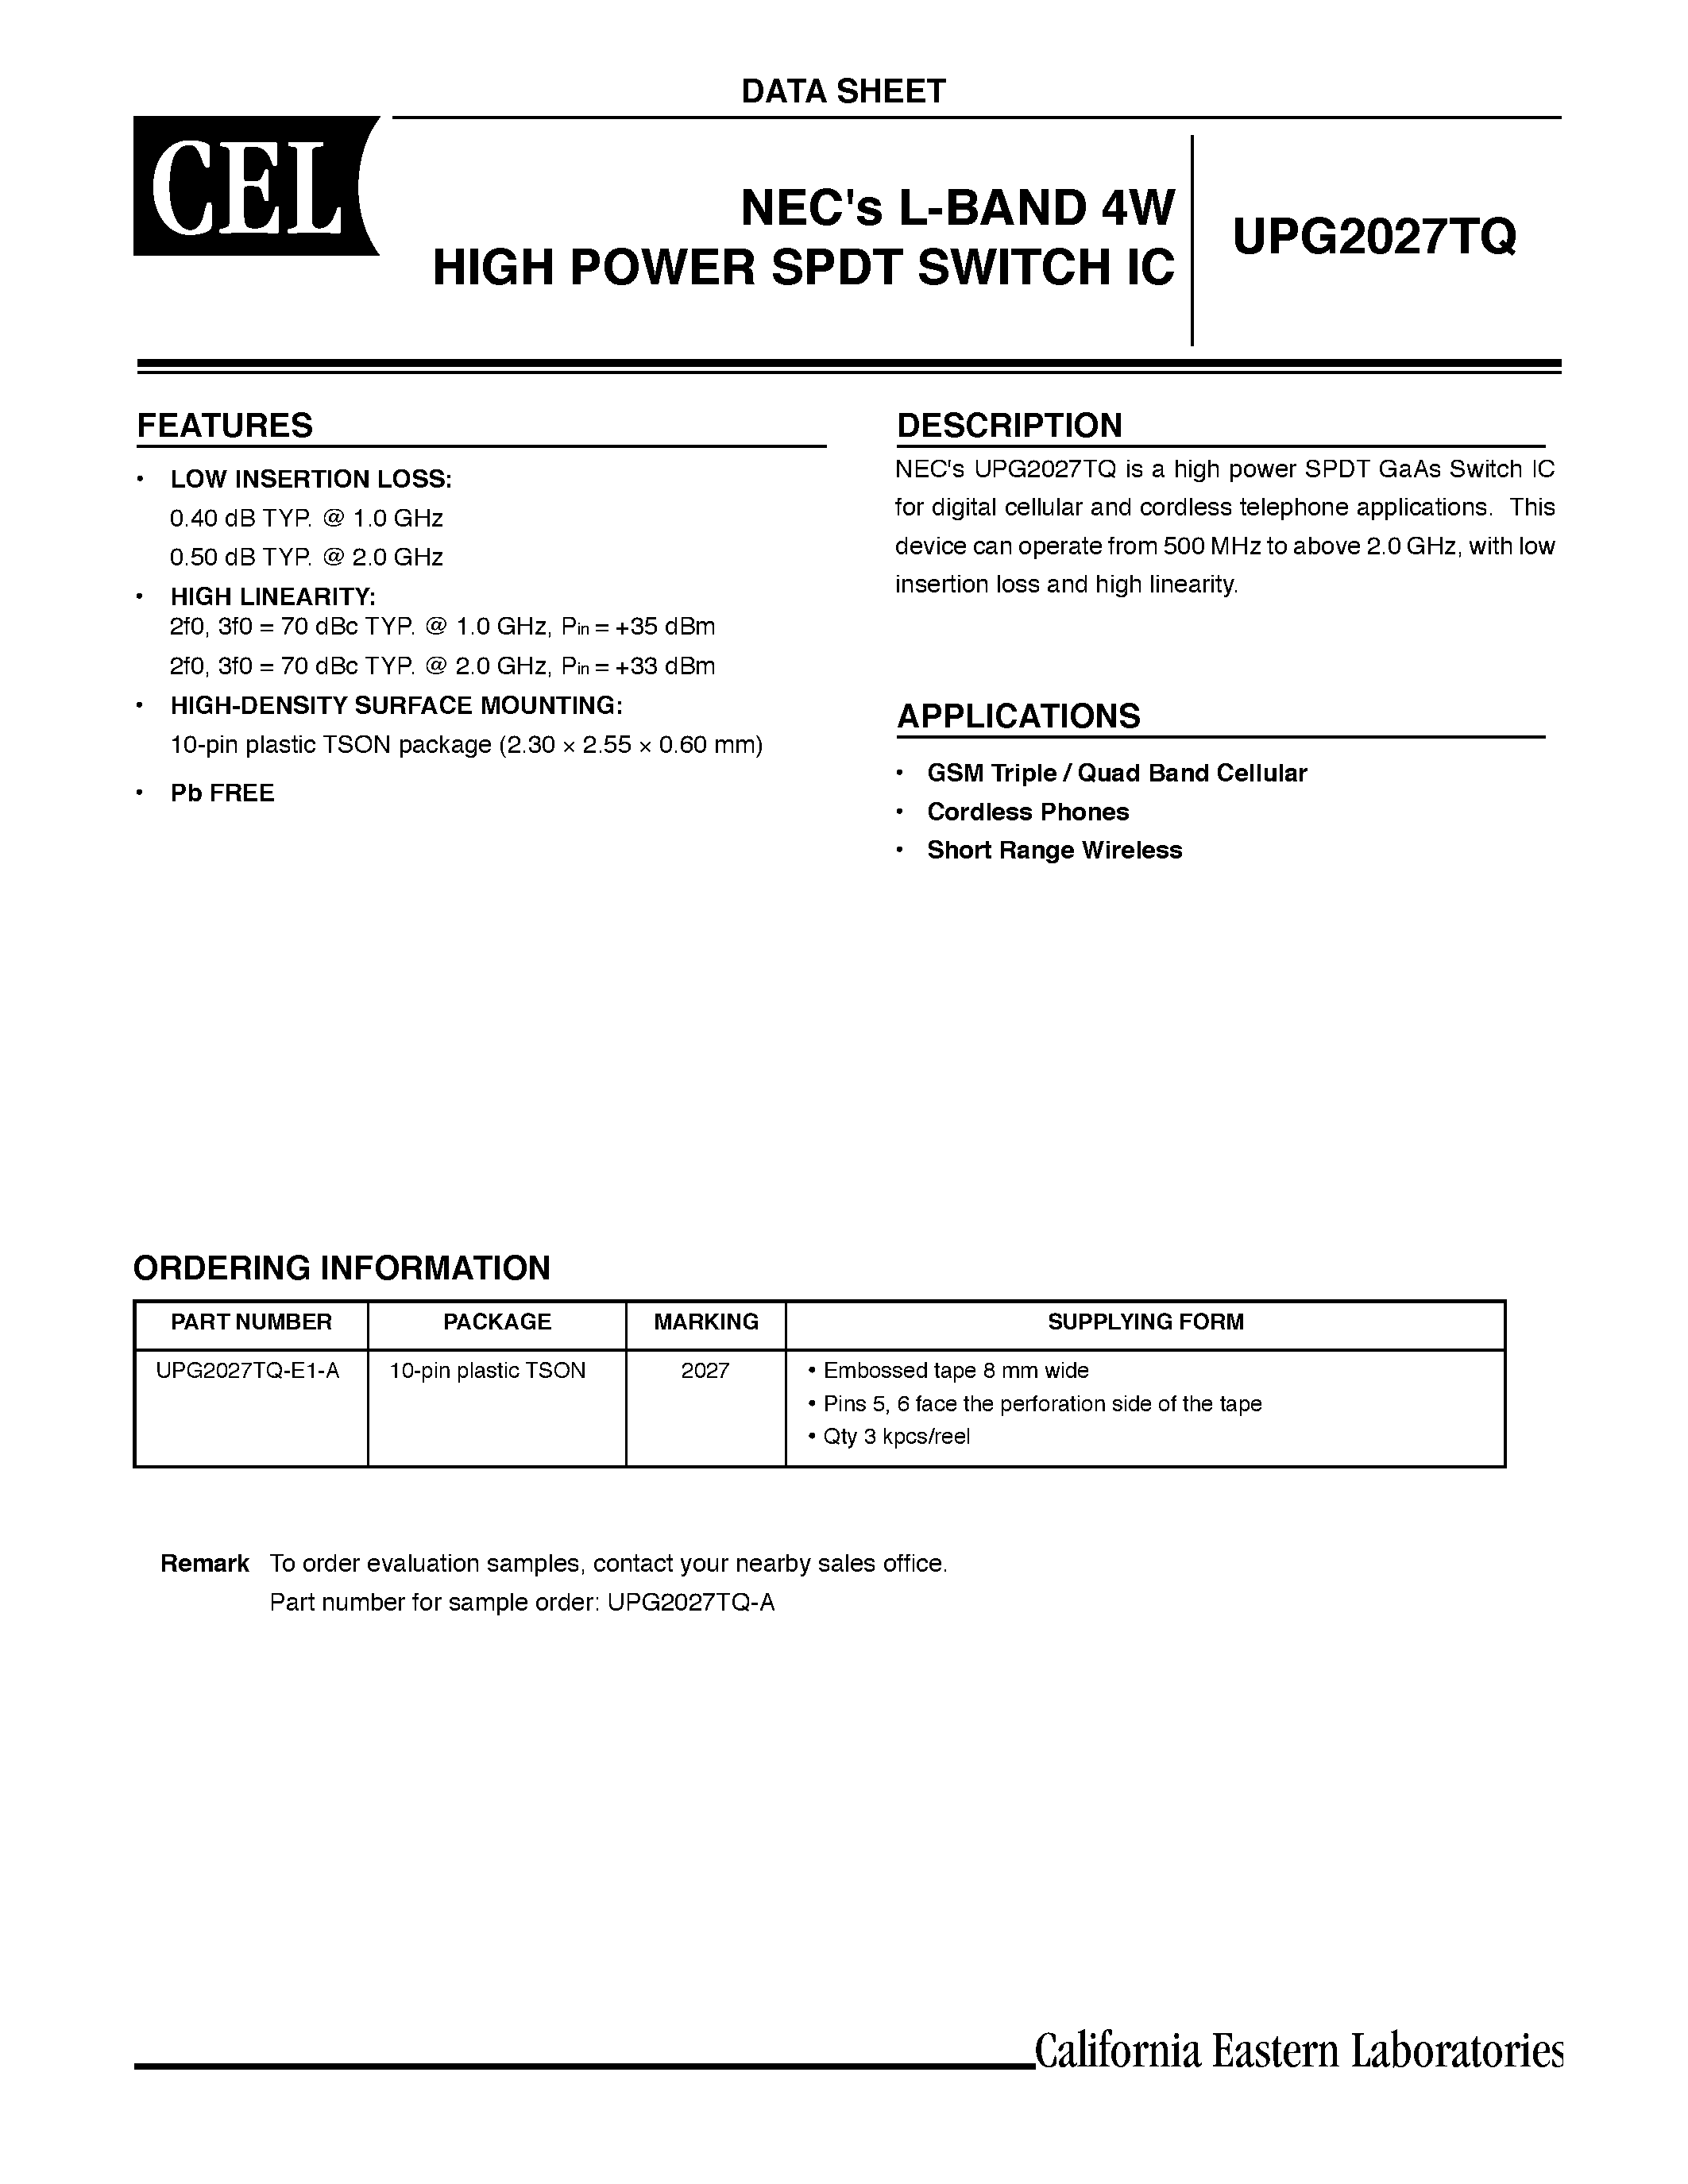 Datasheet UPG2027TQ - NECs L-BAND 4W HIGH POWER SPDT SWITCH IC page 1